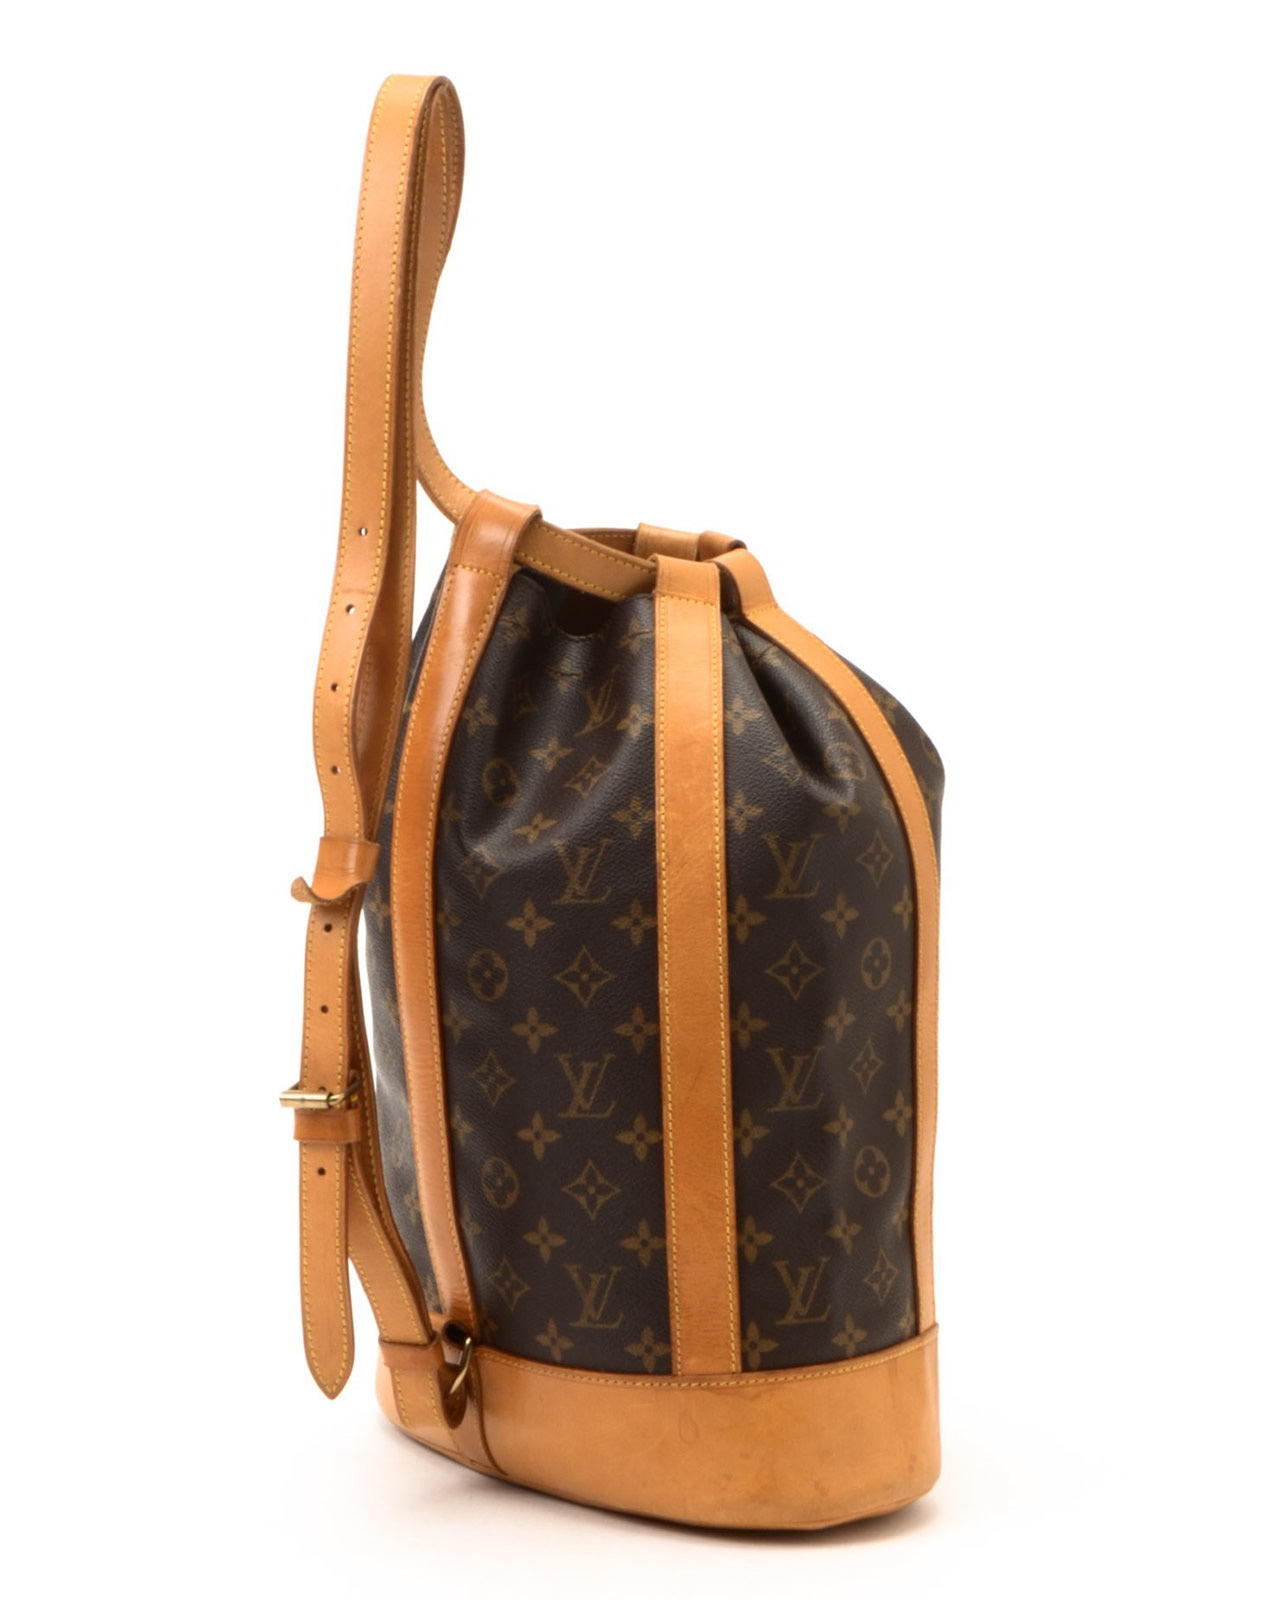 Lyst - Louis Vuitton Randonnee Pm Backpack in Brown